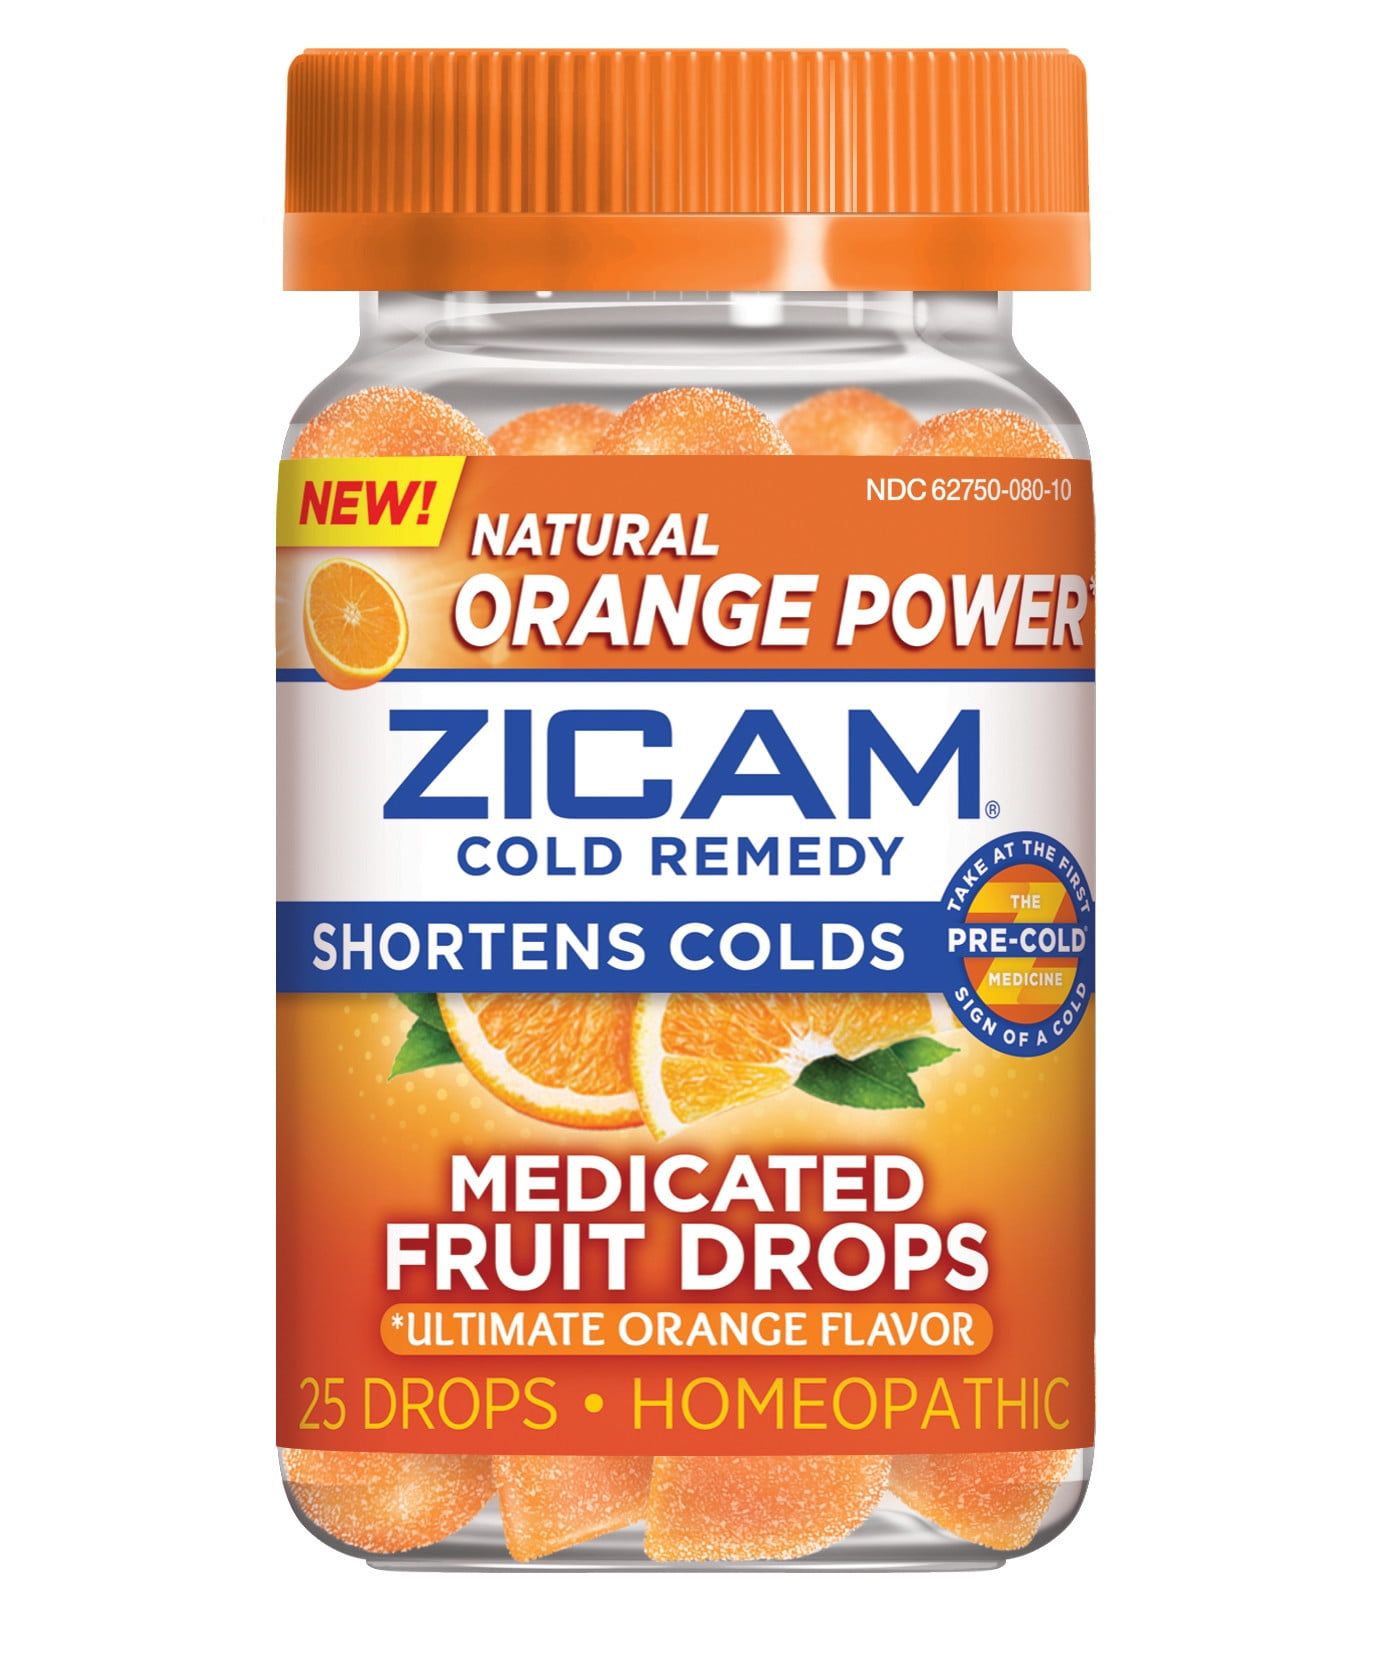 Zicam Cold Remedy, Medicated Fruit Drops, Ultimate Orange Flavor - 25 drops